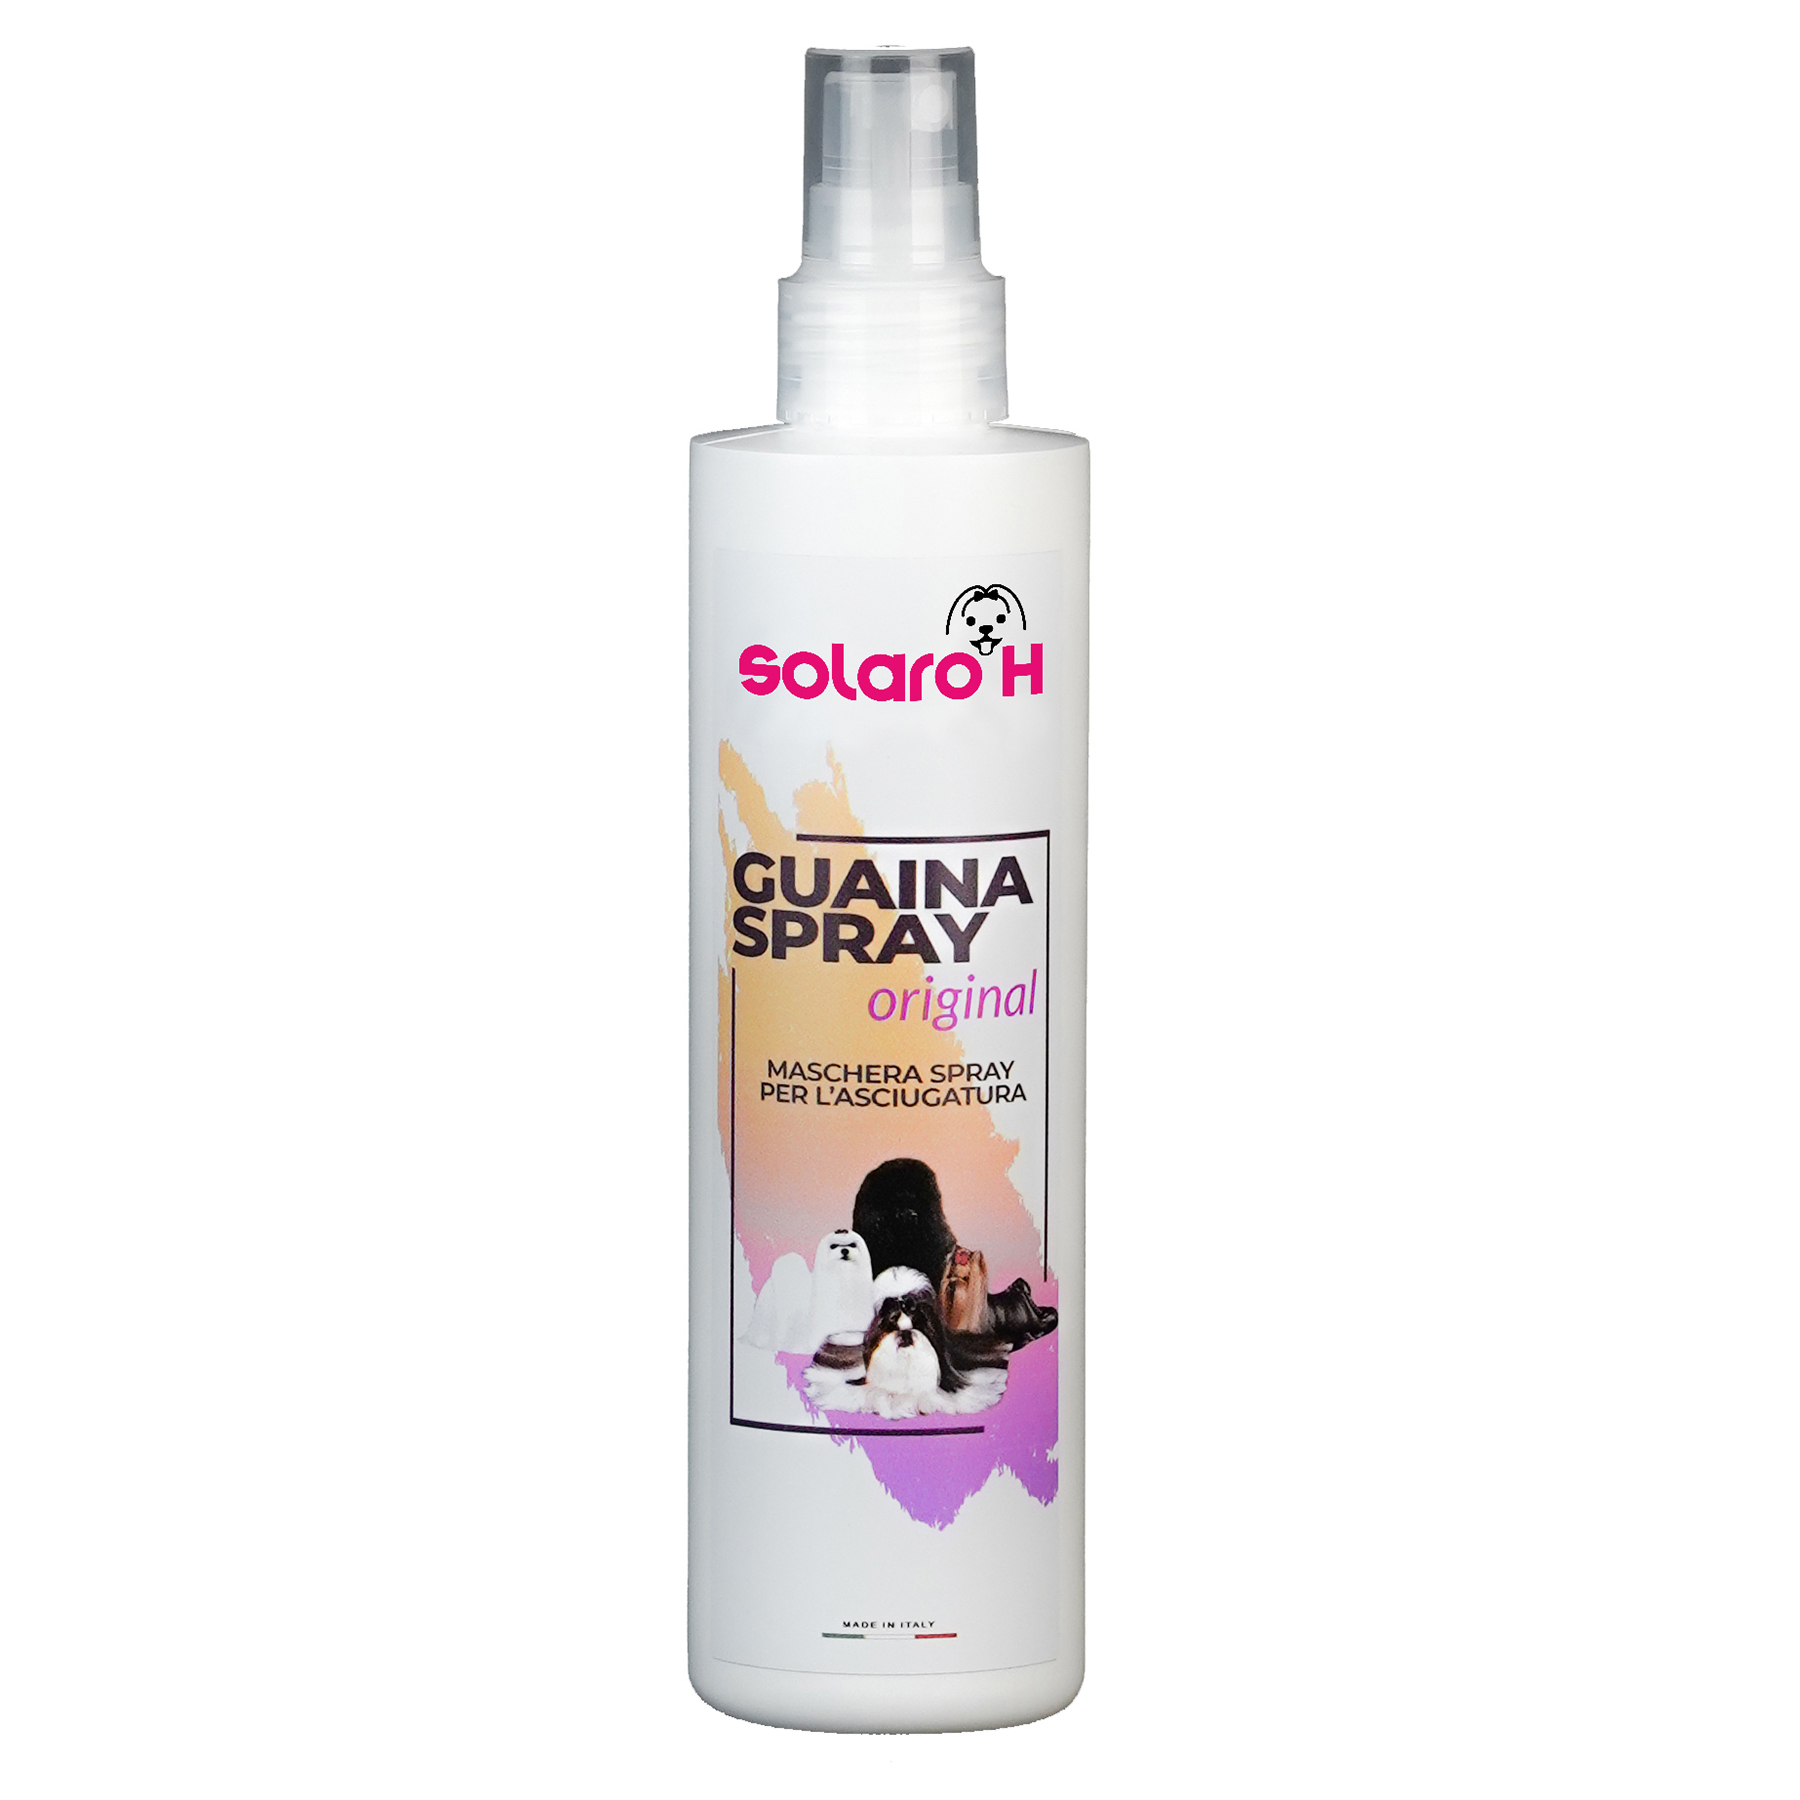 Solaro H Guaina Balsamo Spray